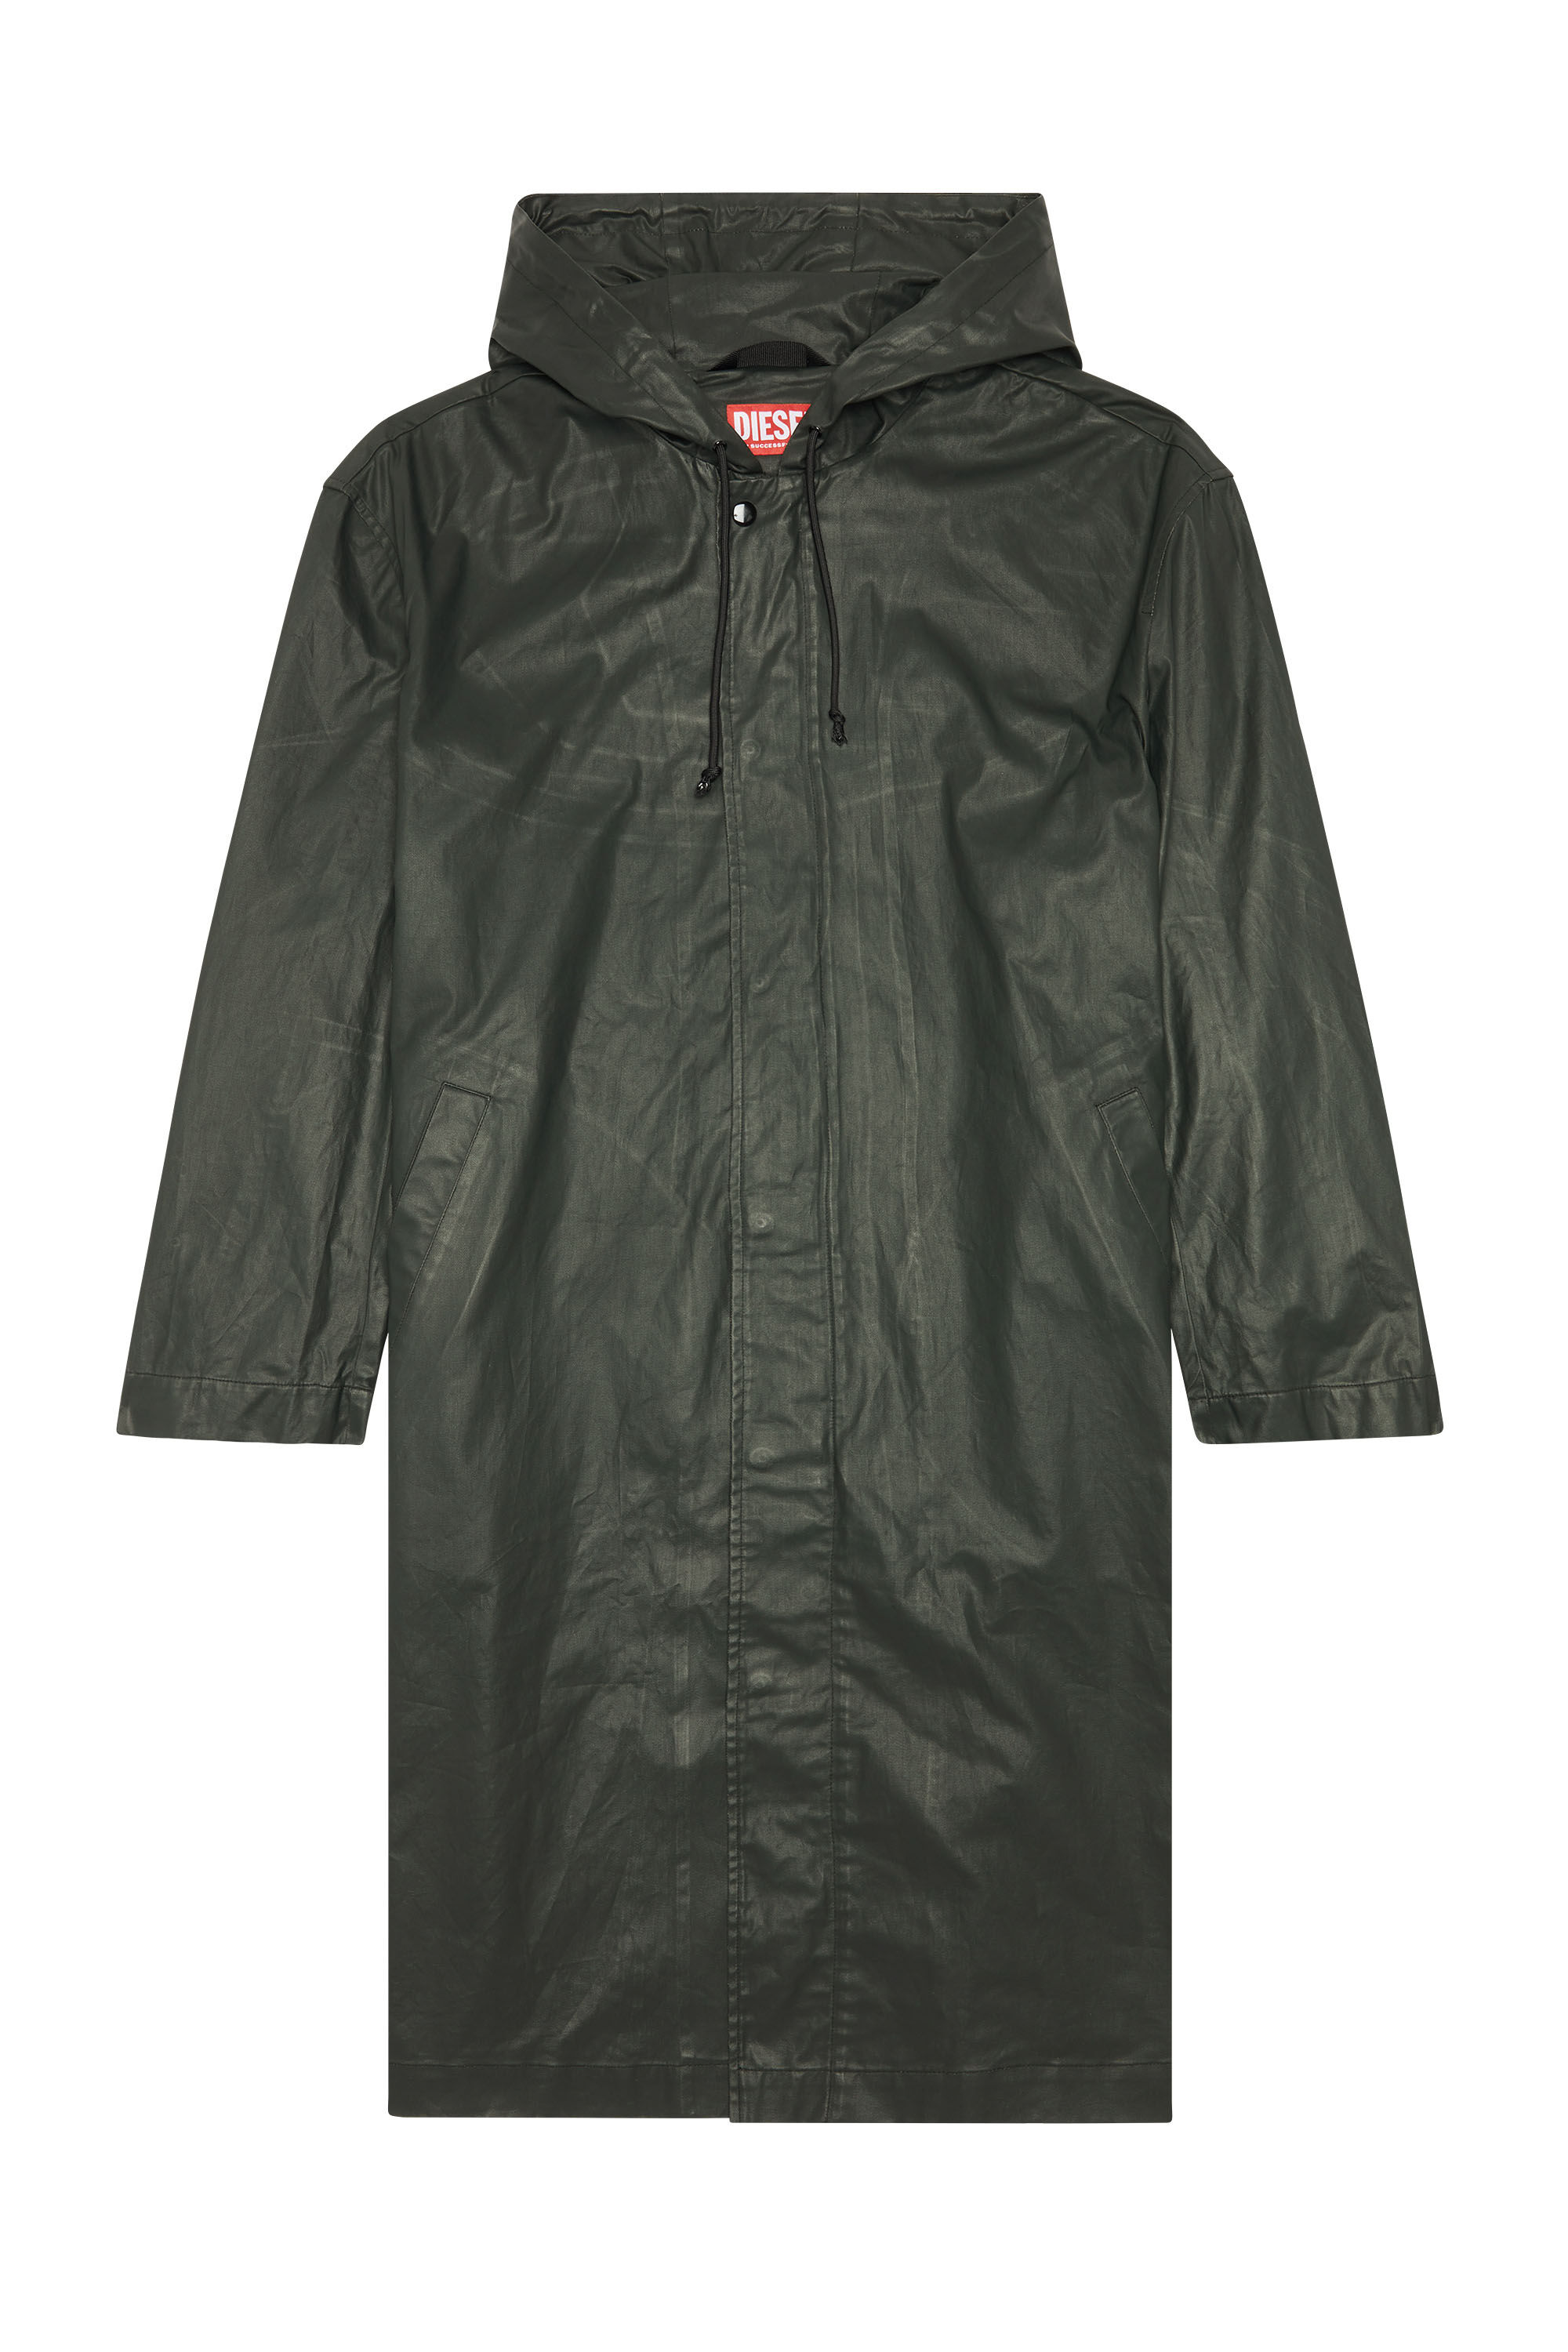 Diesel - J-COAT, Man Long jacket in coated cotton twill in Black - Image 2